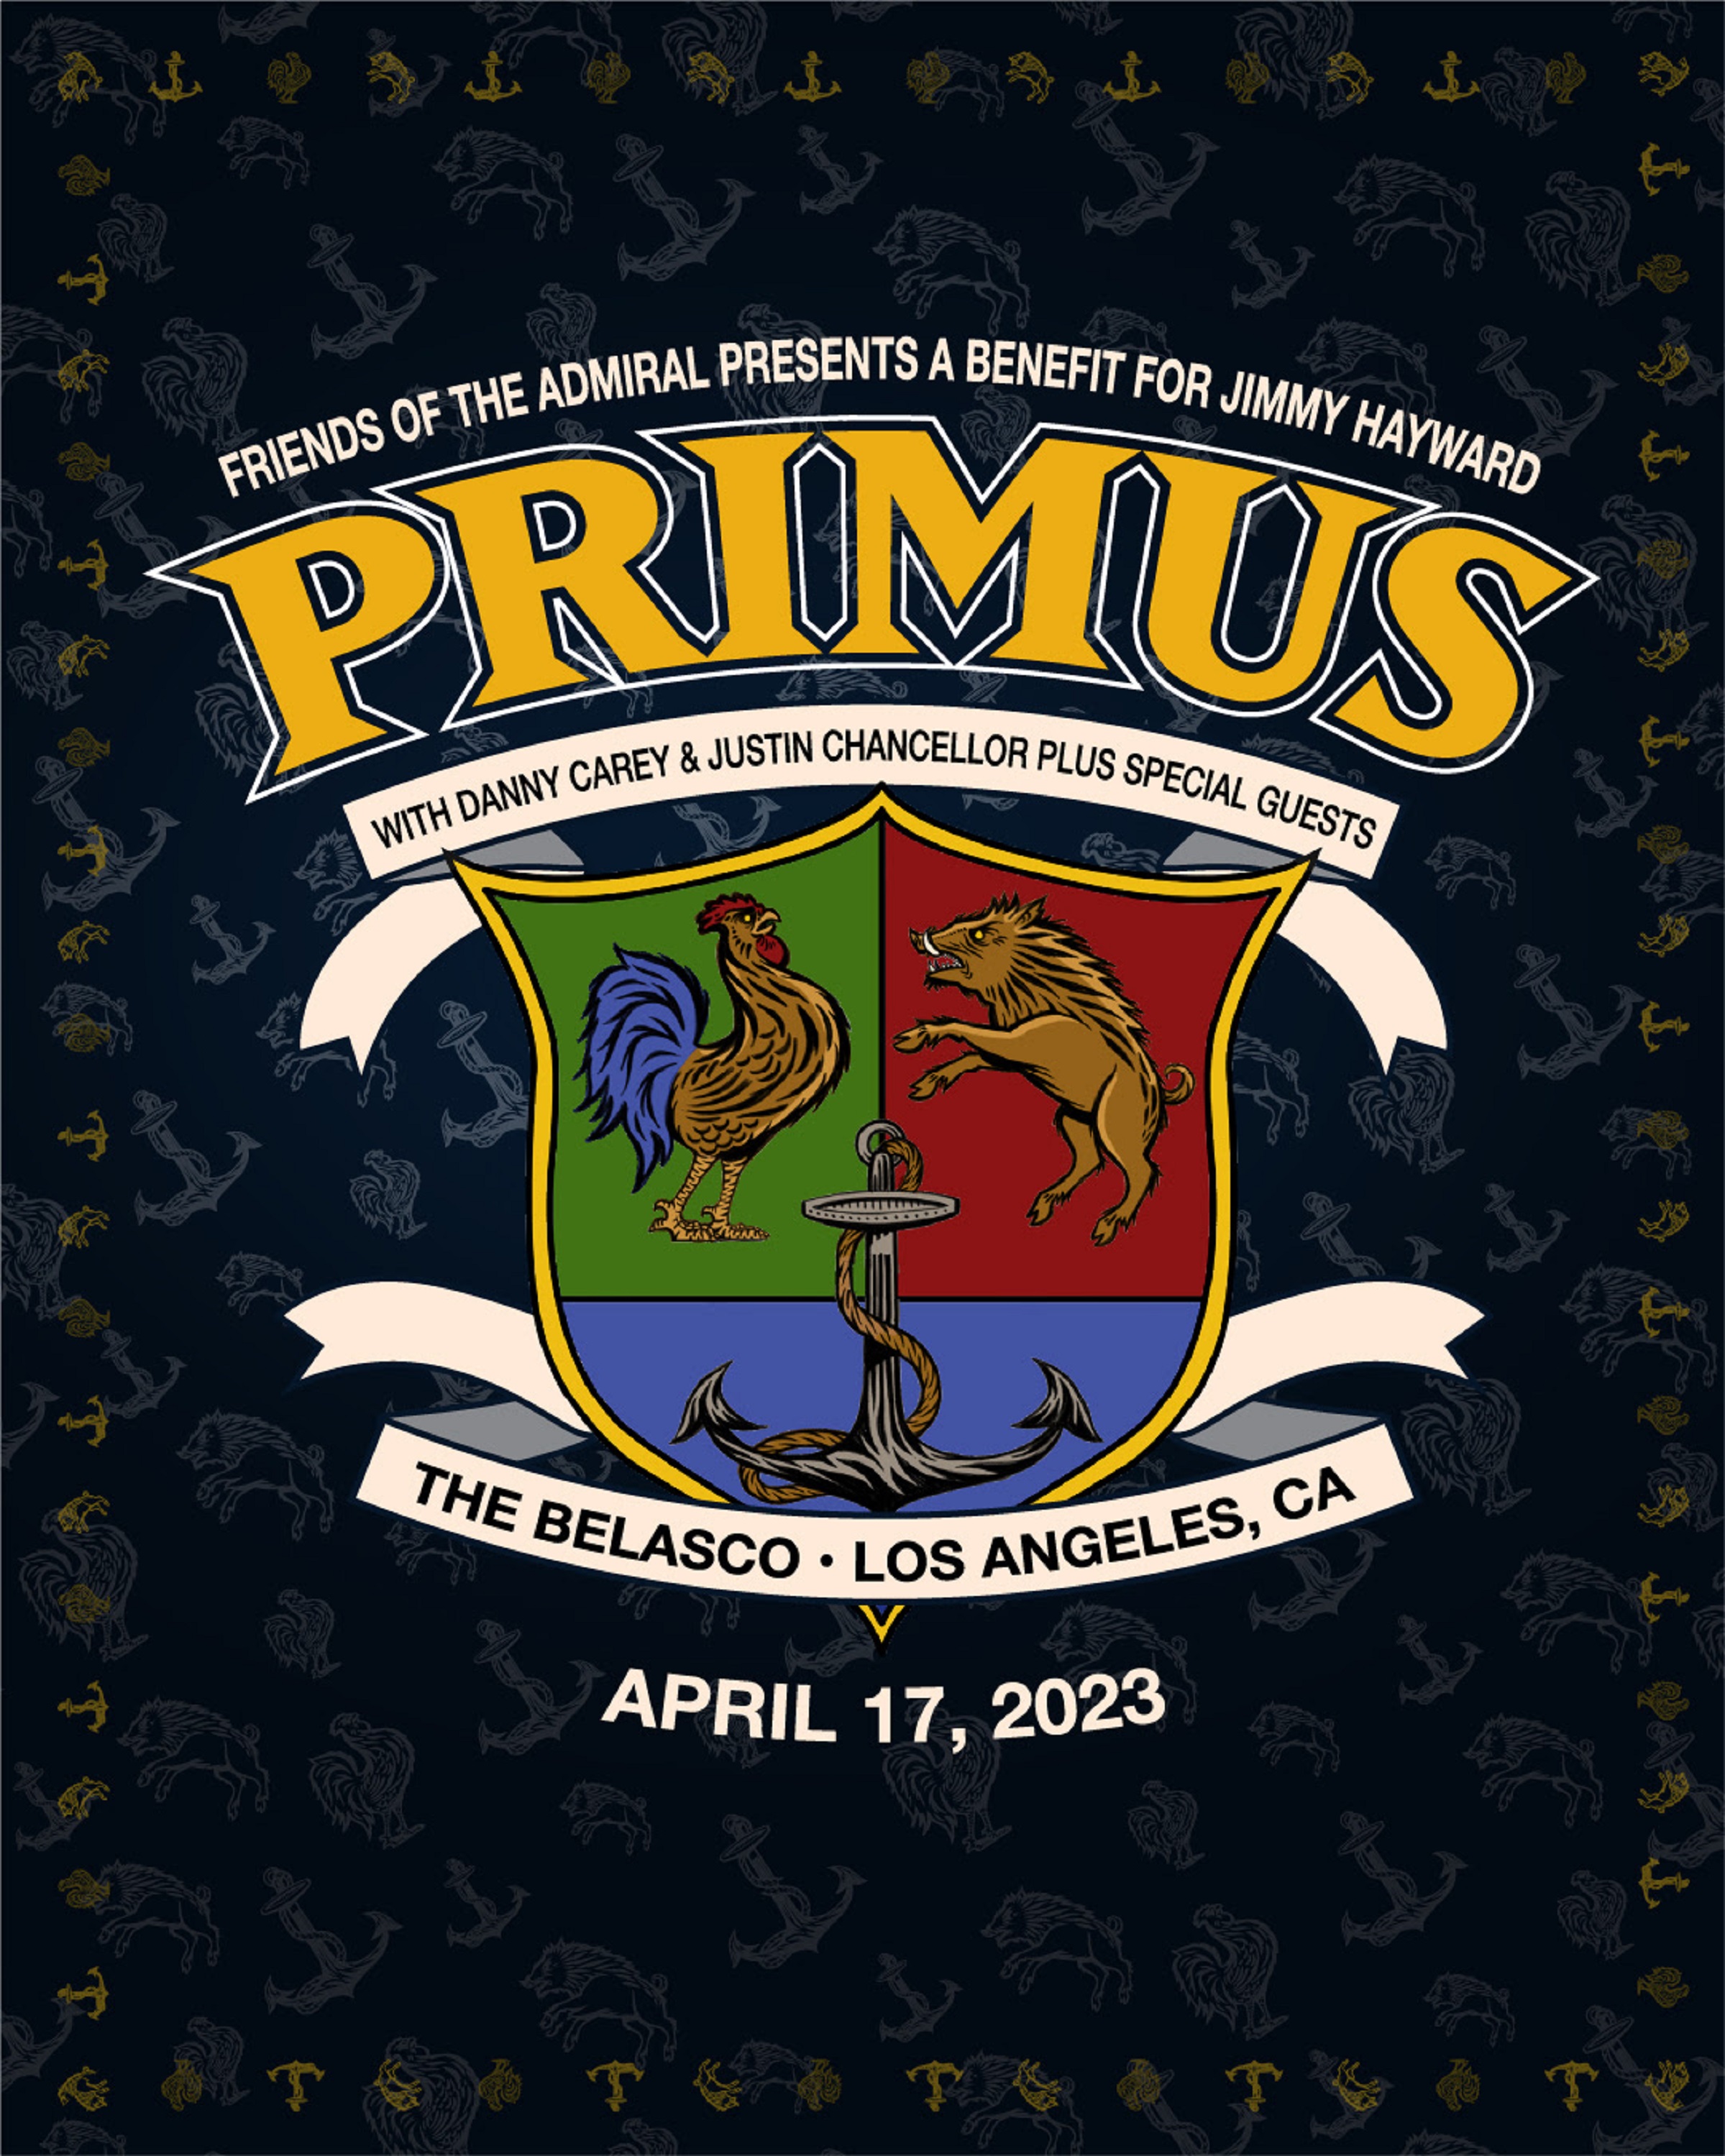 Primus, Tool members announce intimate LA benefit concert